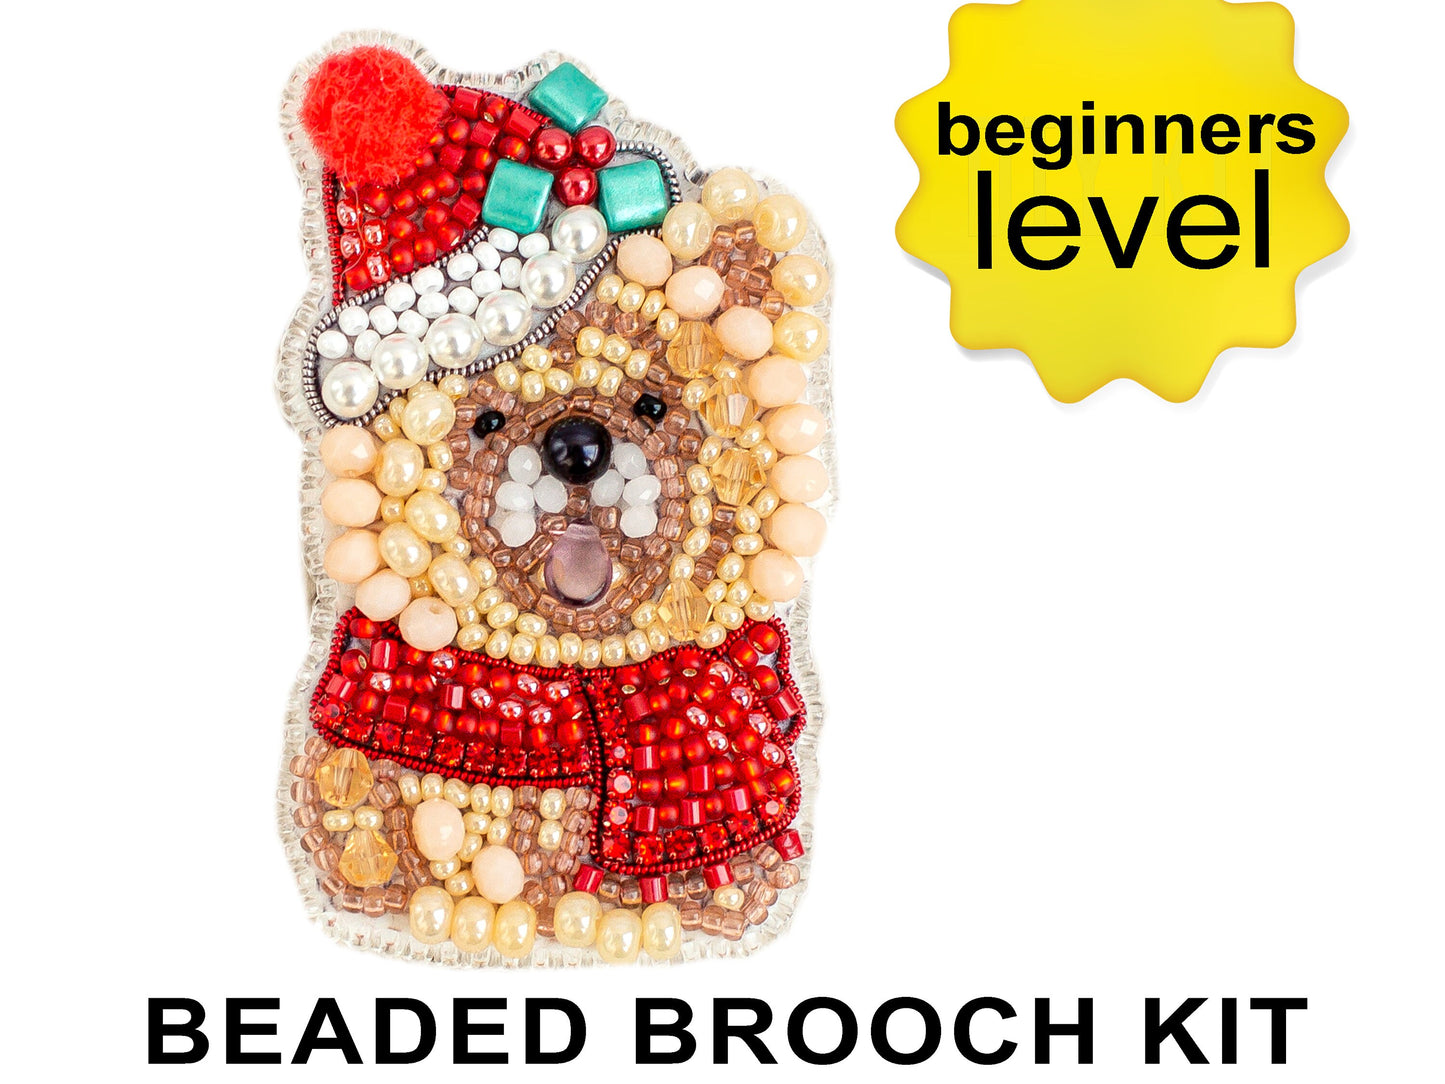 Christmas Dog Bead embroidery kit. Seed Bead Brooch kit. DIY Craft kit. Beadweaving Kit. Needlework beading. Handmade Jewelry Making Kit